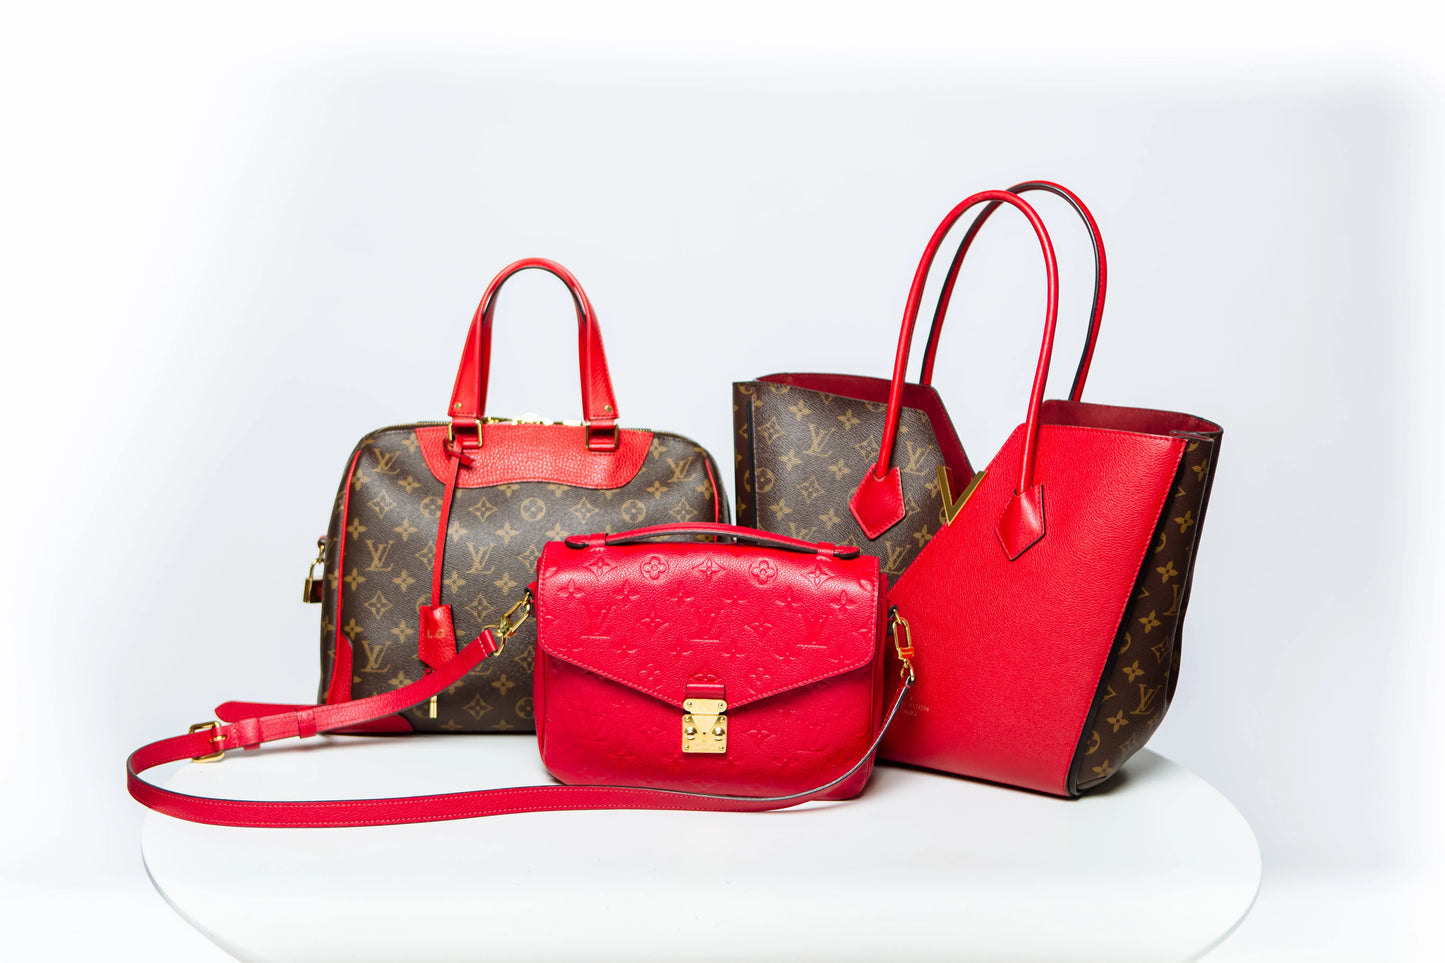 Only Luxury - Bolsa Louis Vuitton Color: Roja Clones de